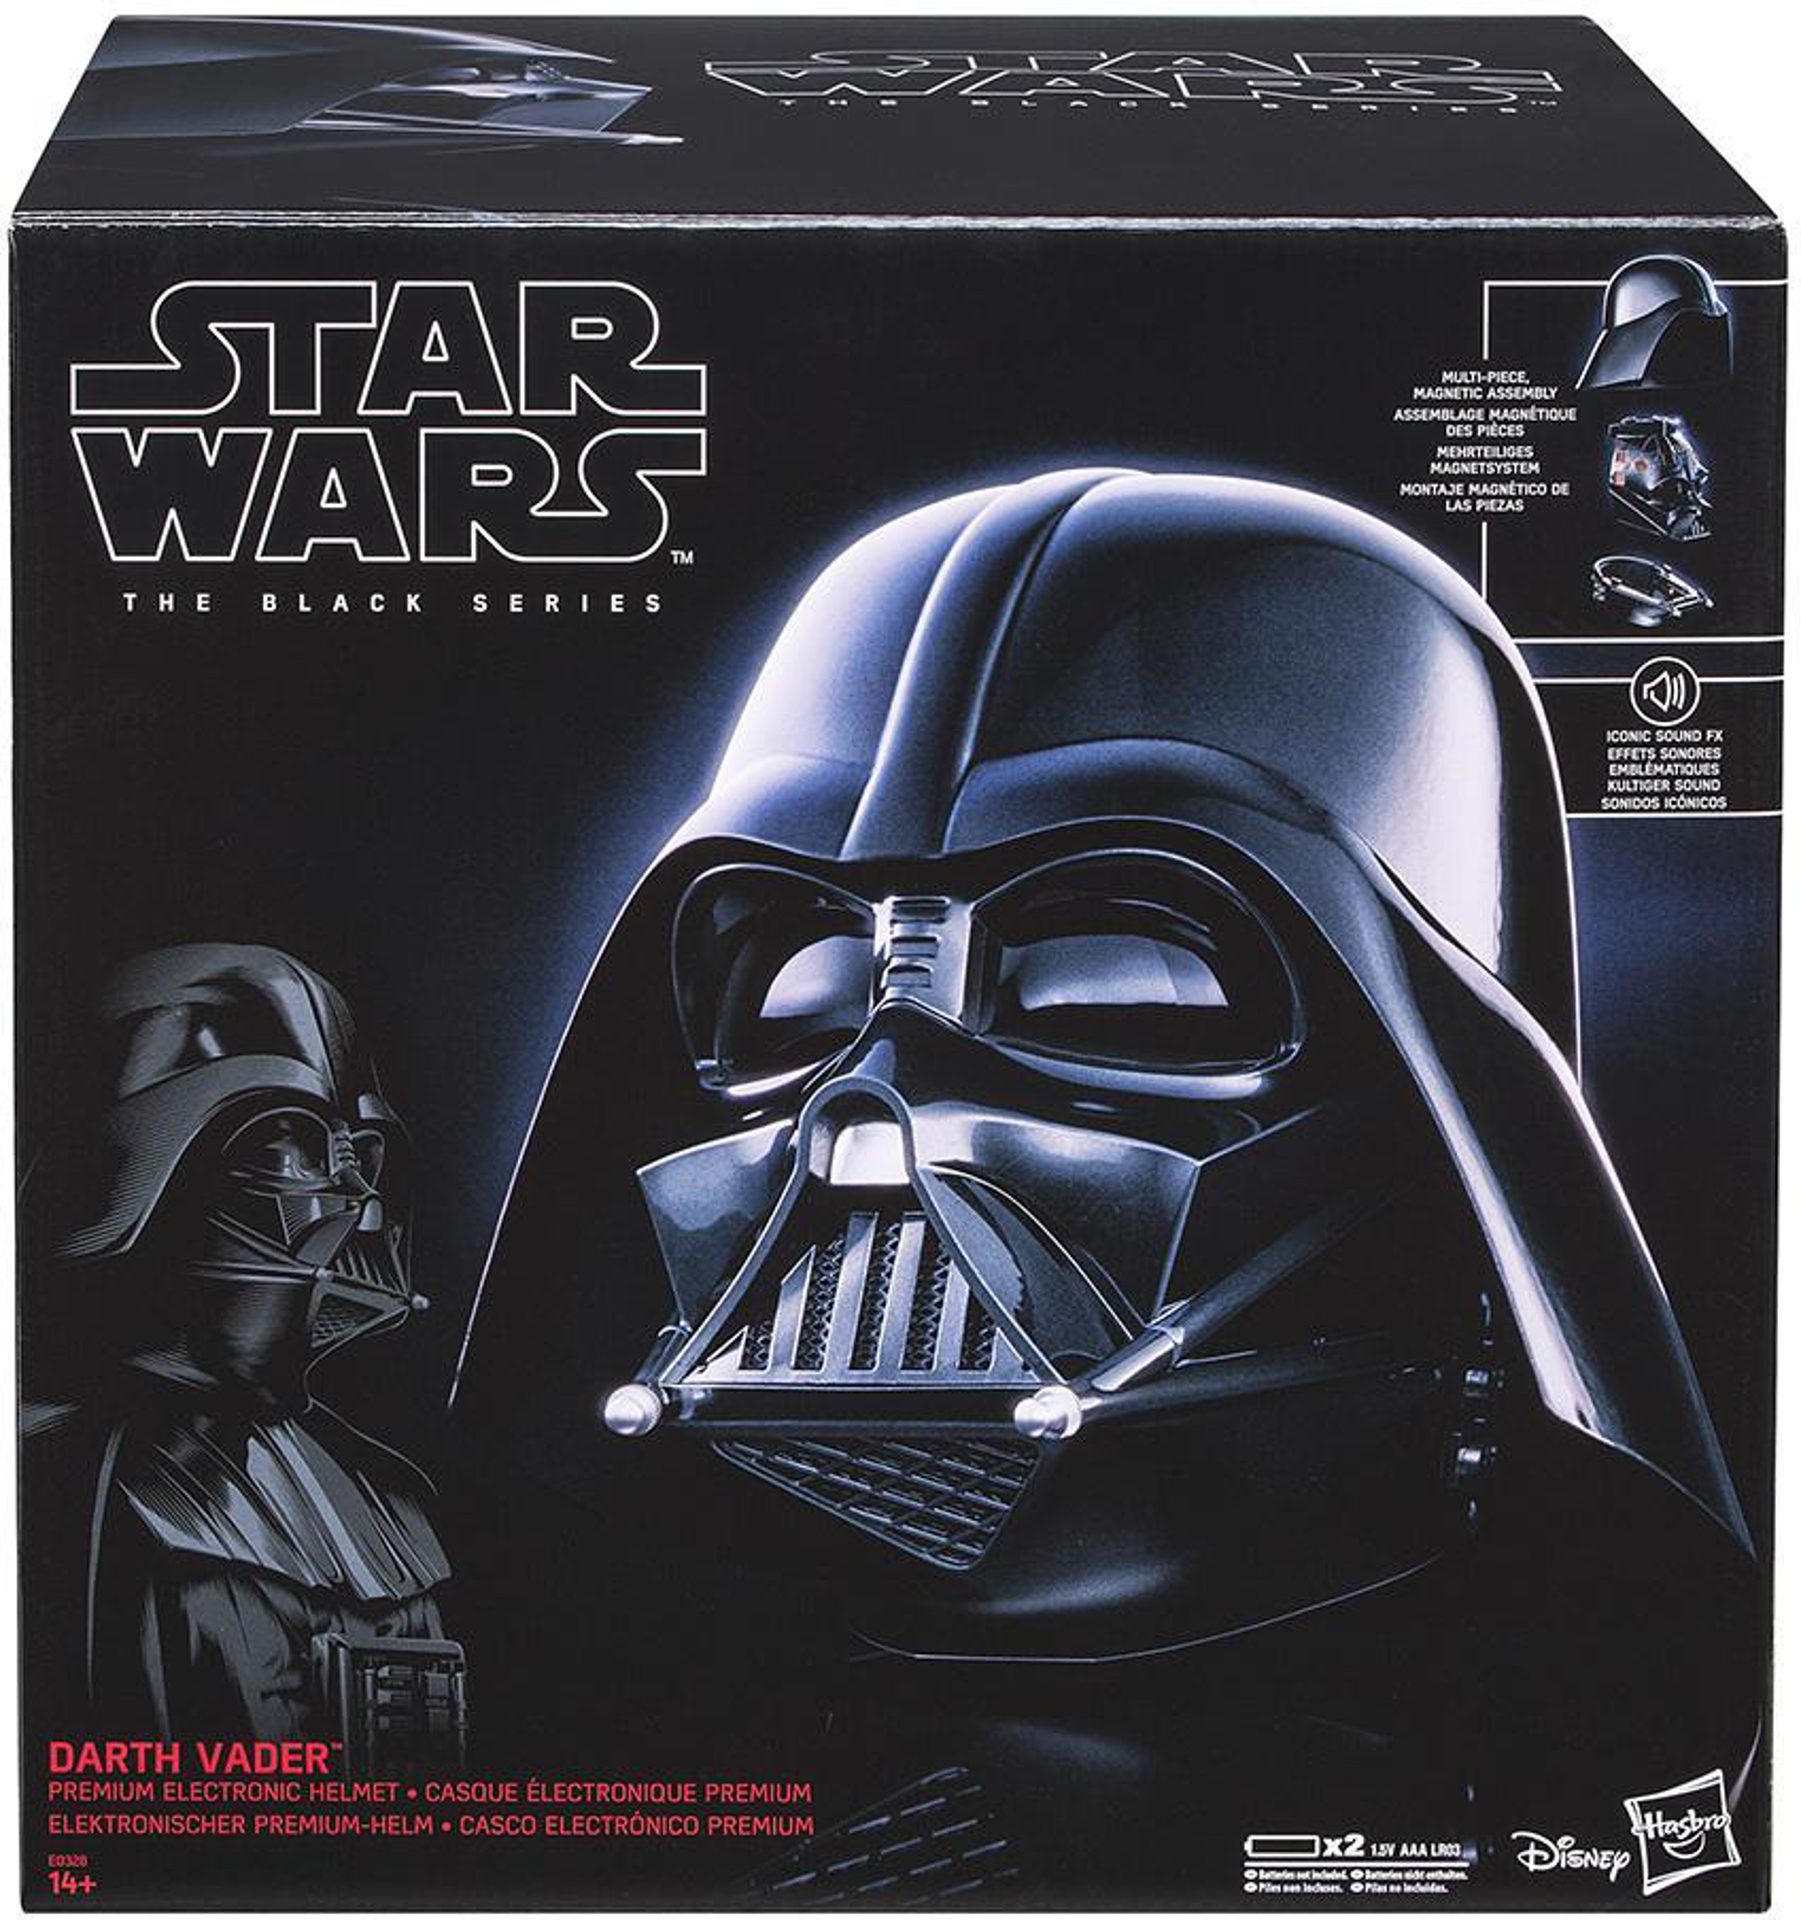 Star Wars The Black Series - Réplique 1/1 Premium du casque de Darth Vader